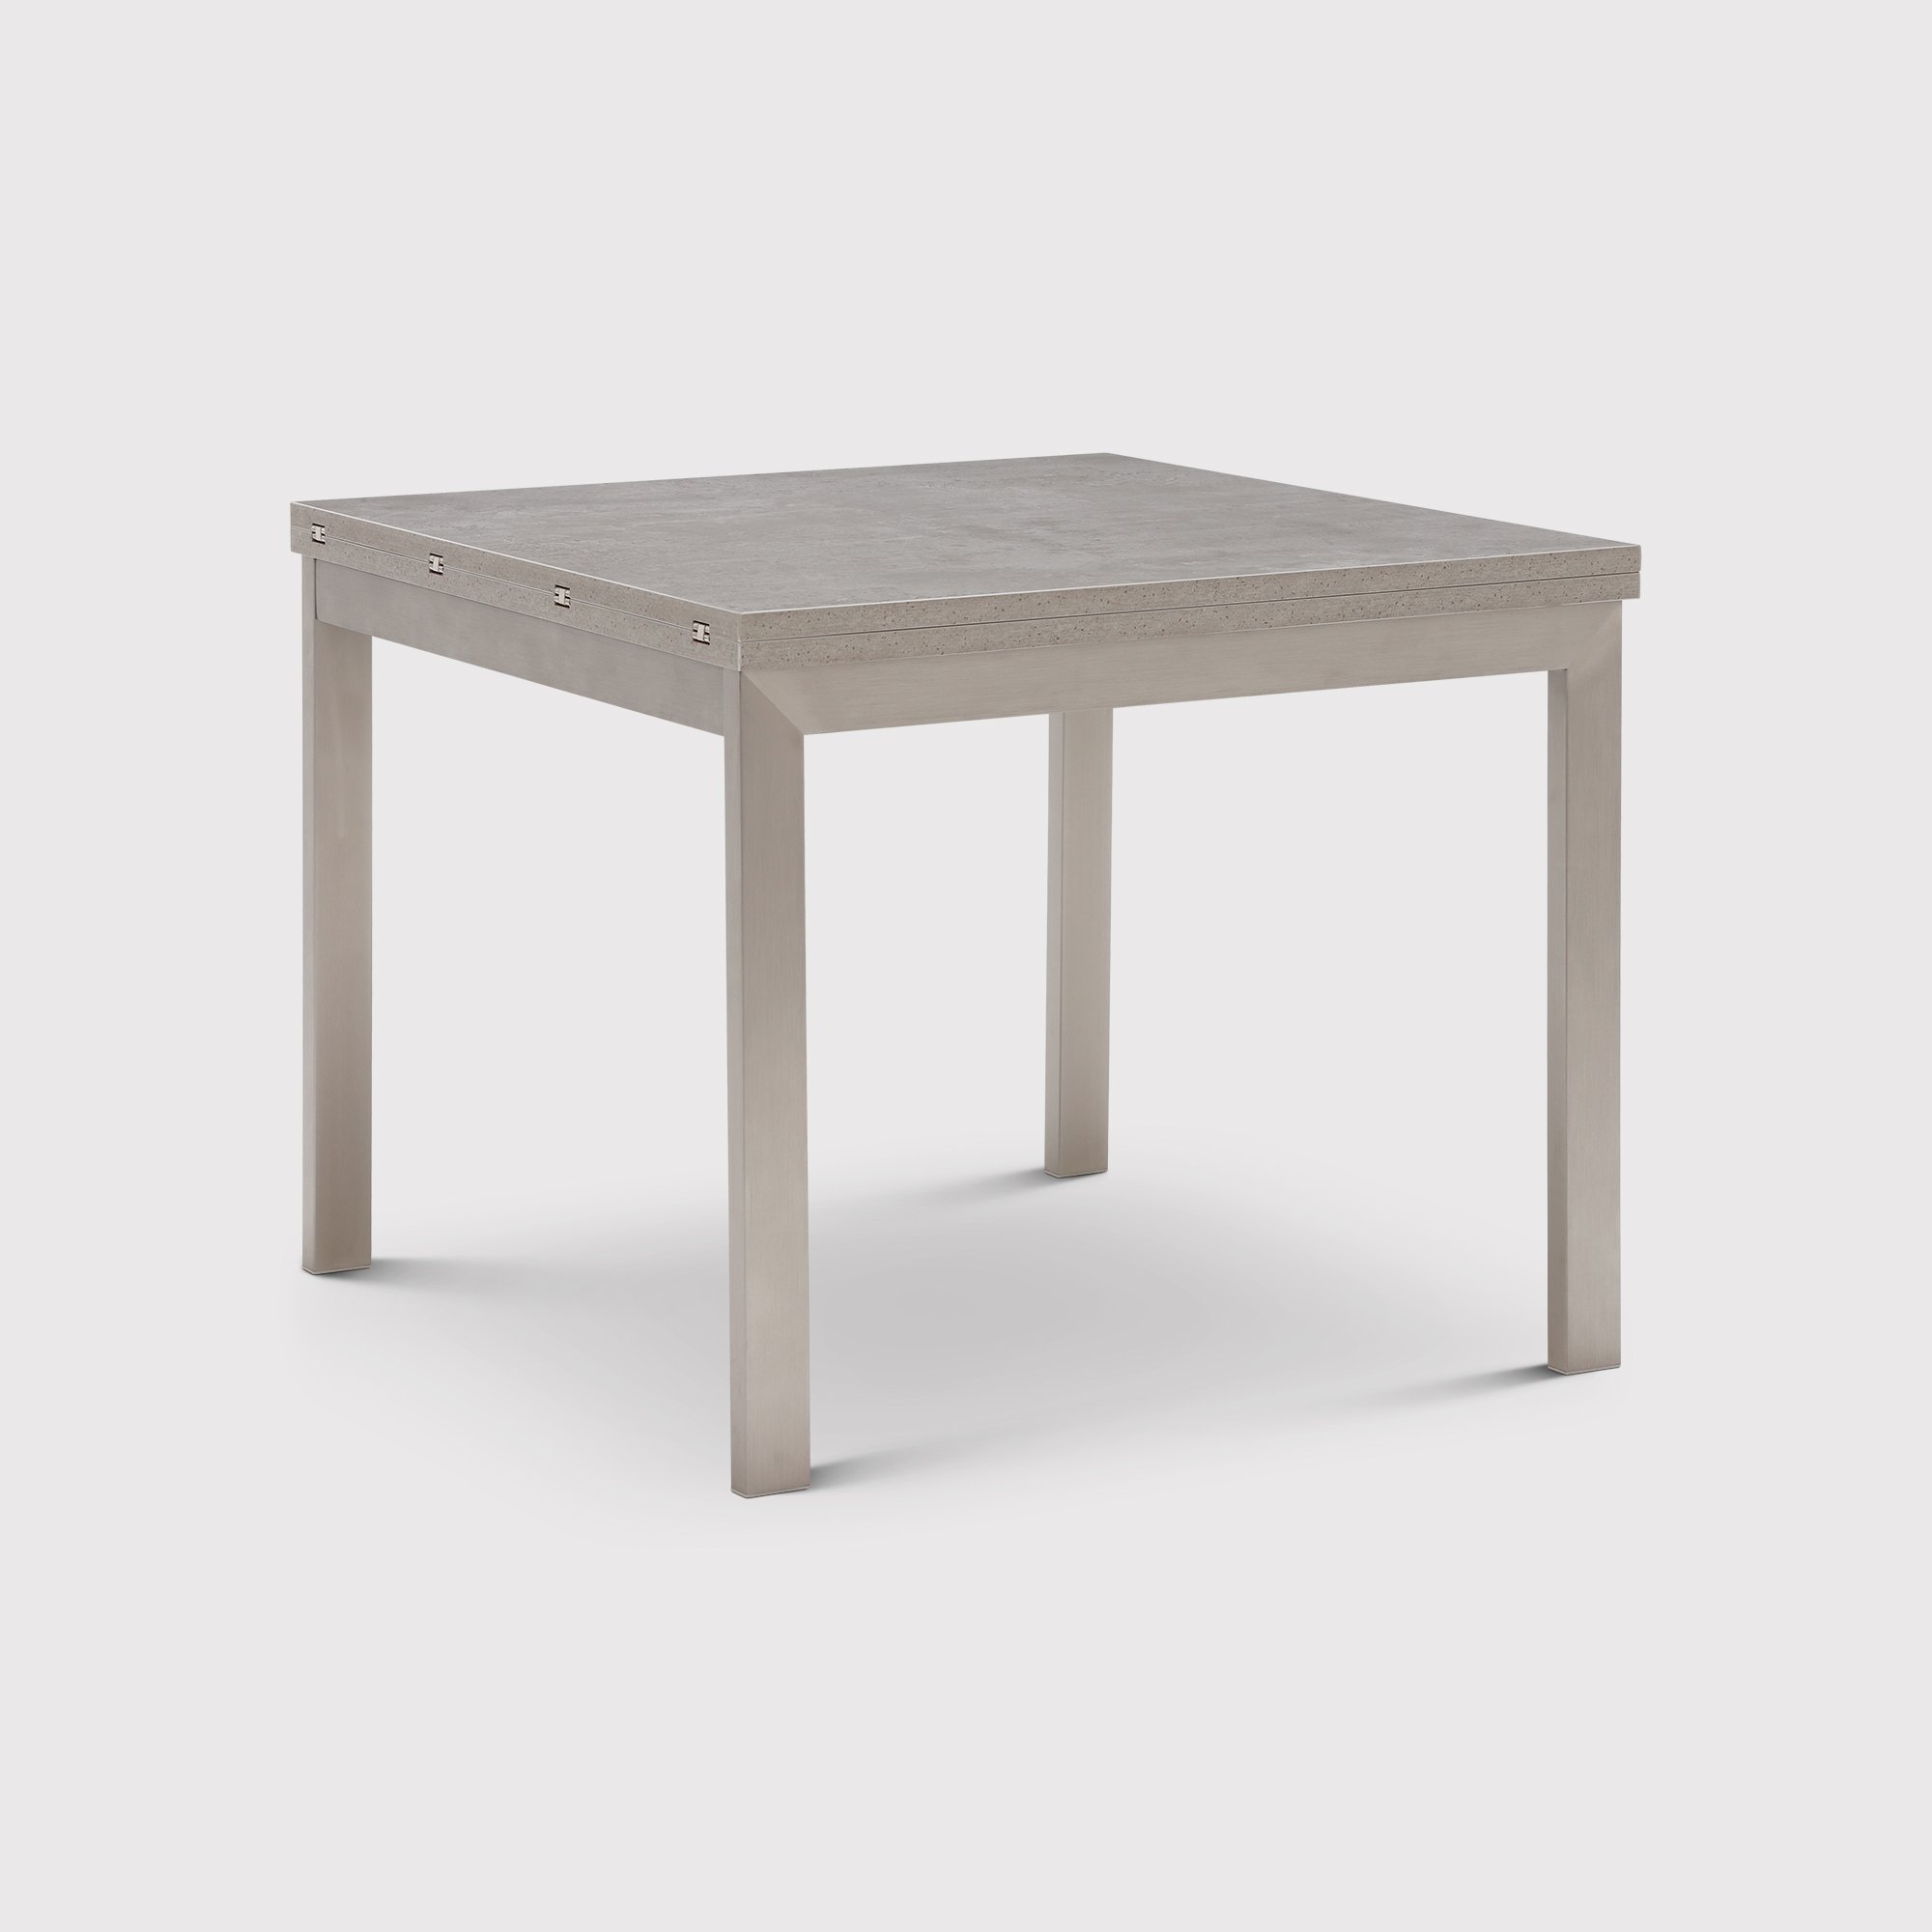 Photo of Halmstad flip top table 90-180cm in grey